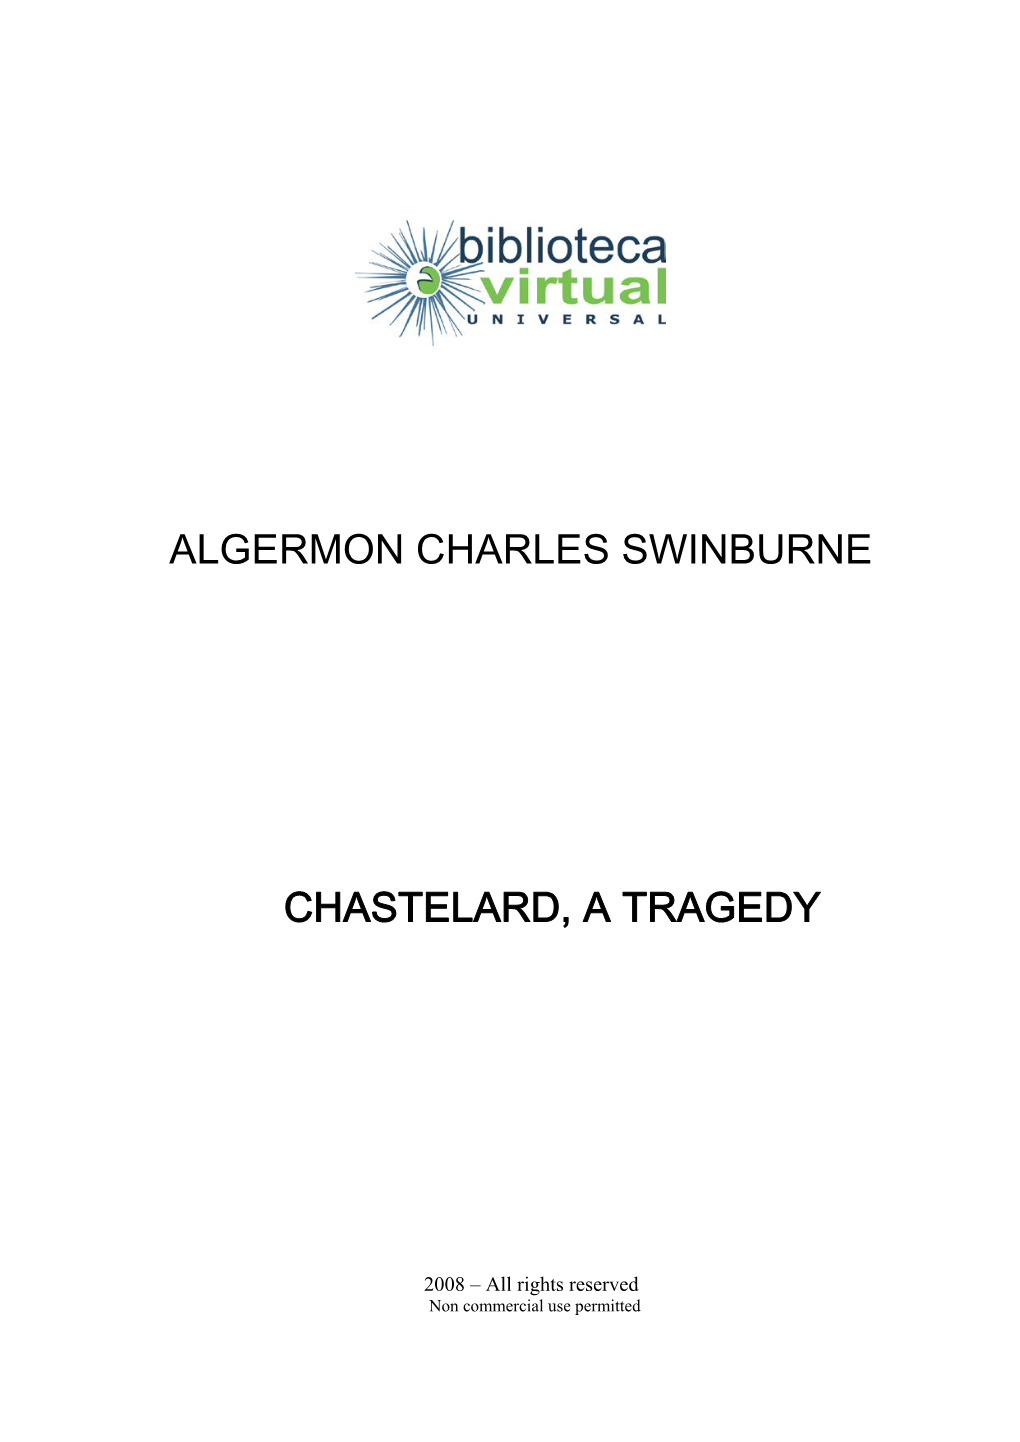 Algermon Charles Swinburne Chastelard, a Tragedy